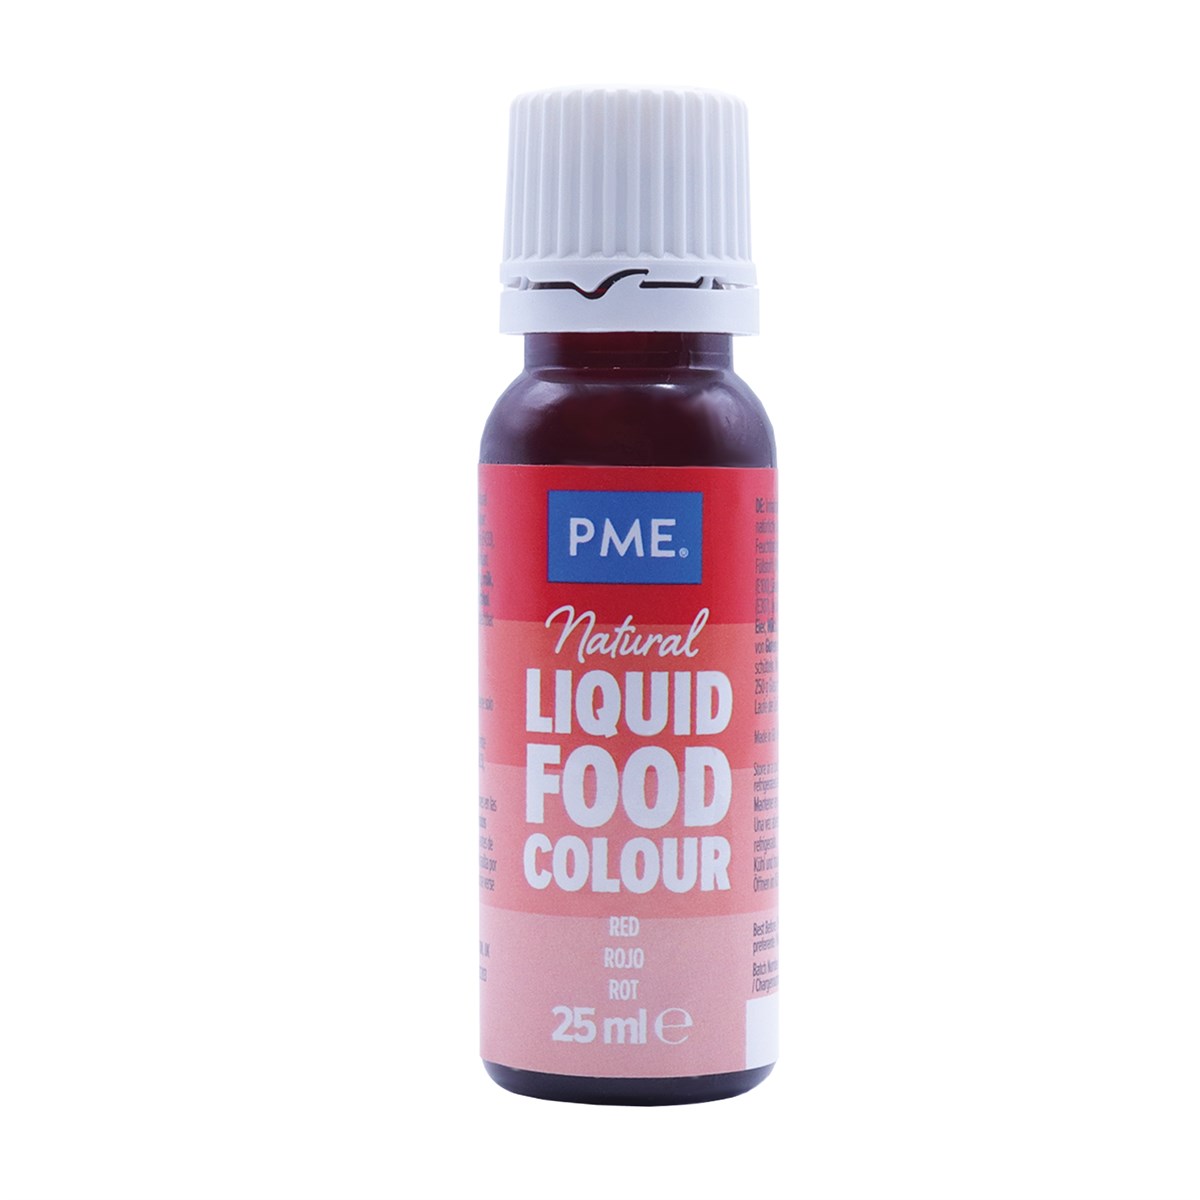 Colorant alimentaire Rouge naturel - Liquide - PME